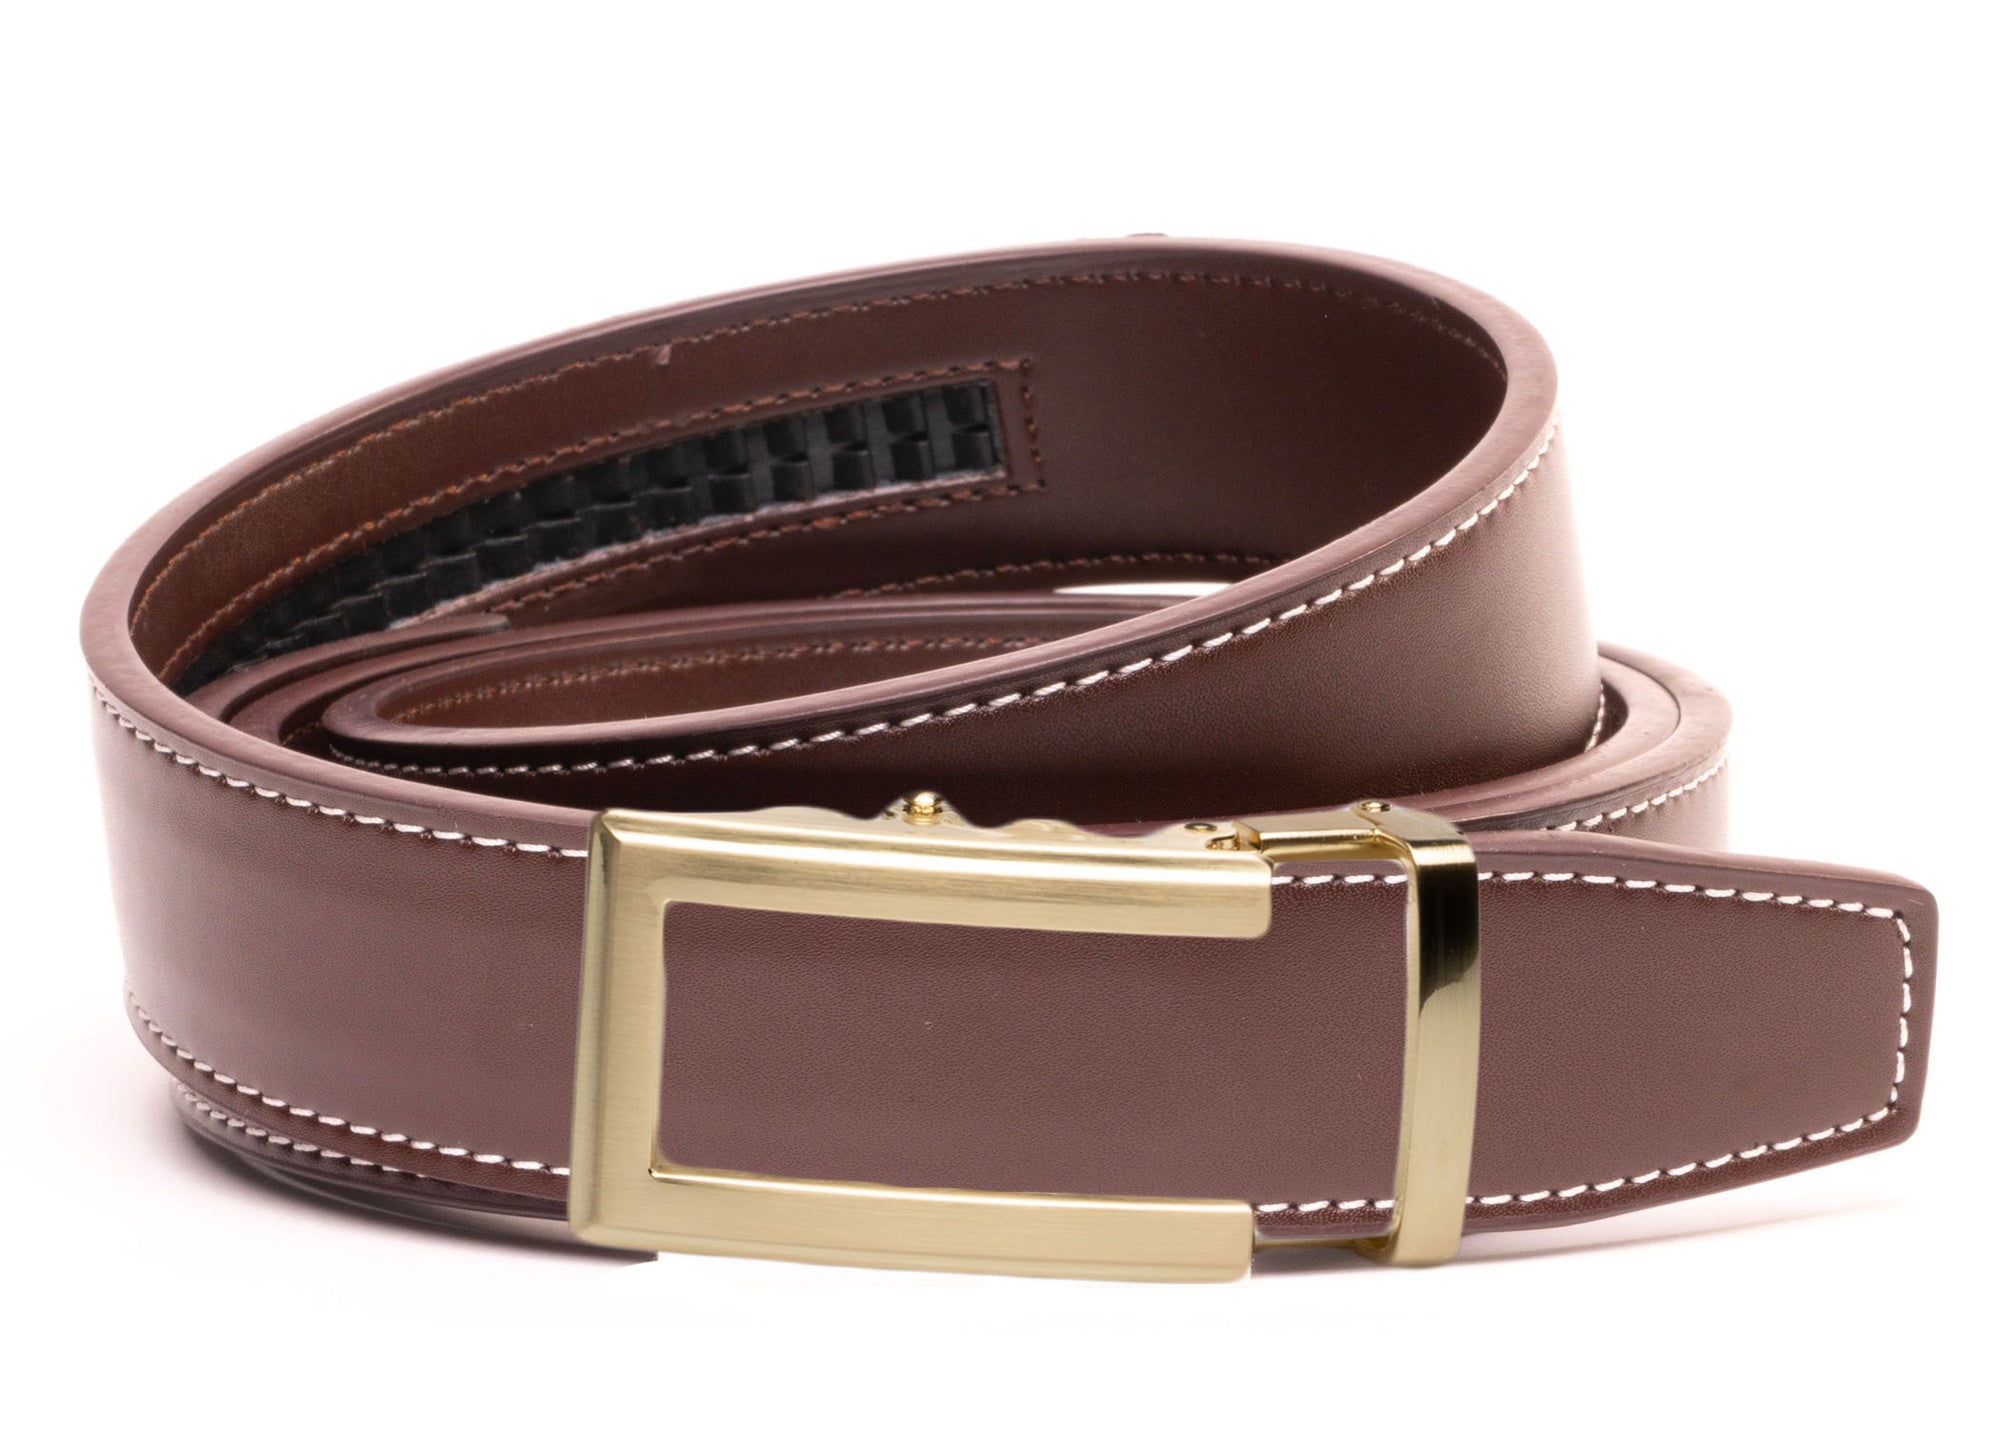 Golf Belts Series By Railtek  Ratchet Style - Ratchet Belts & Buckles -  Railtek Ratchet Belts - Railtek Belts